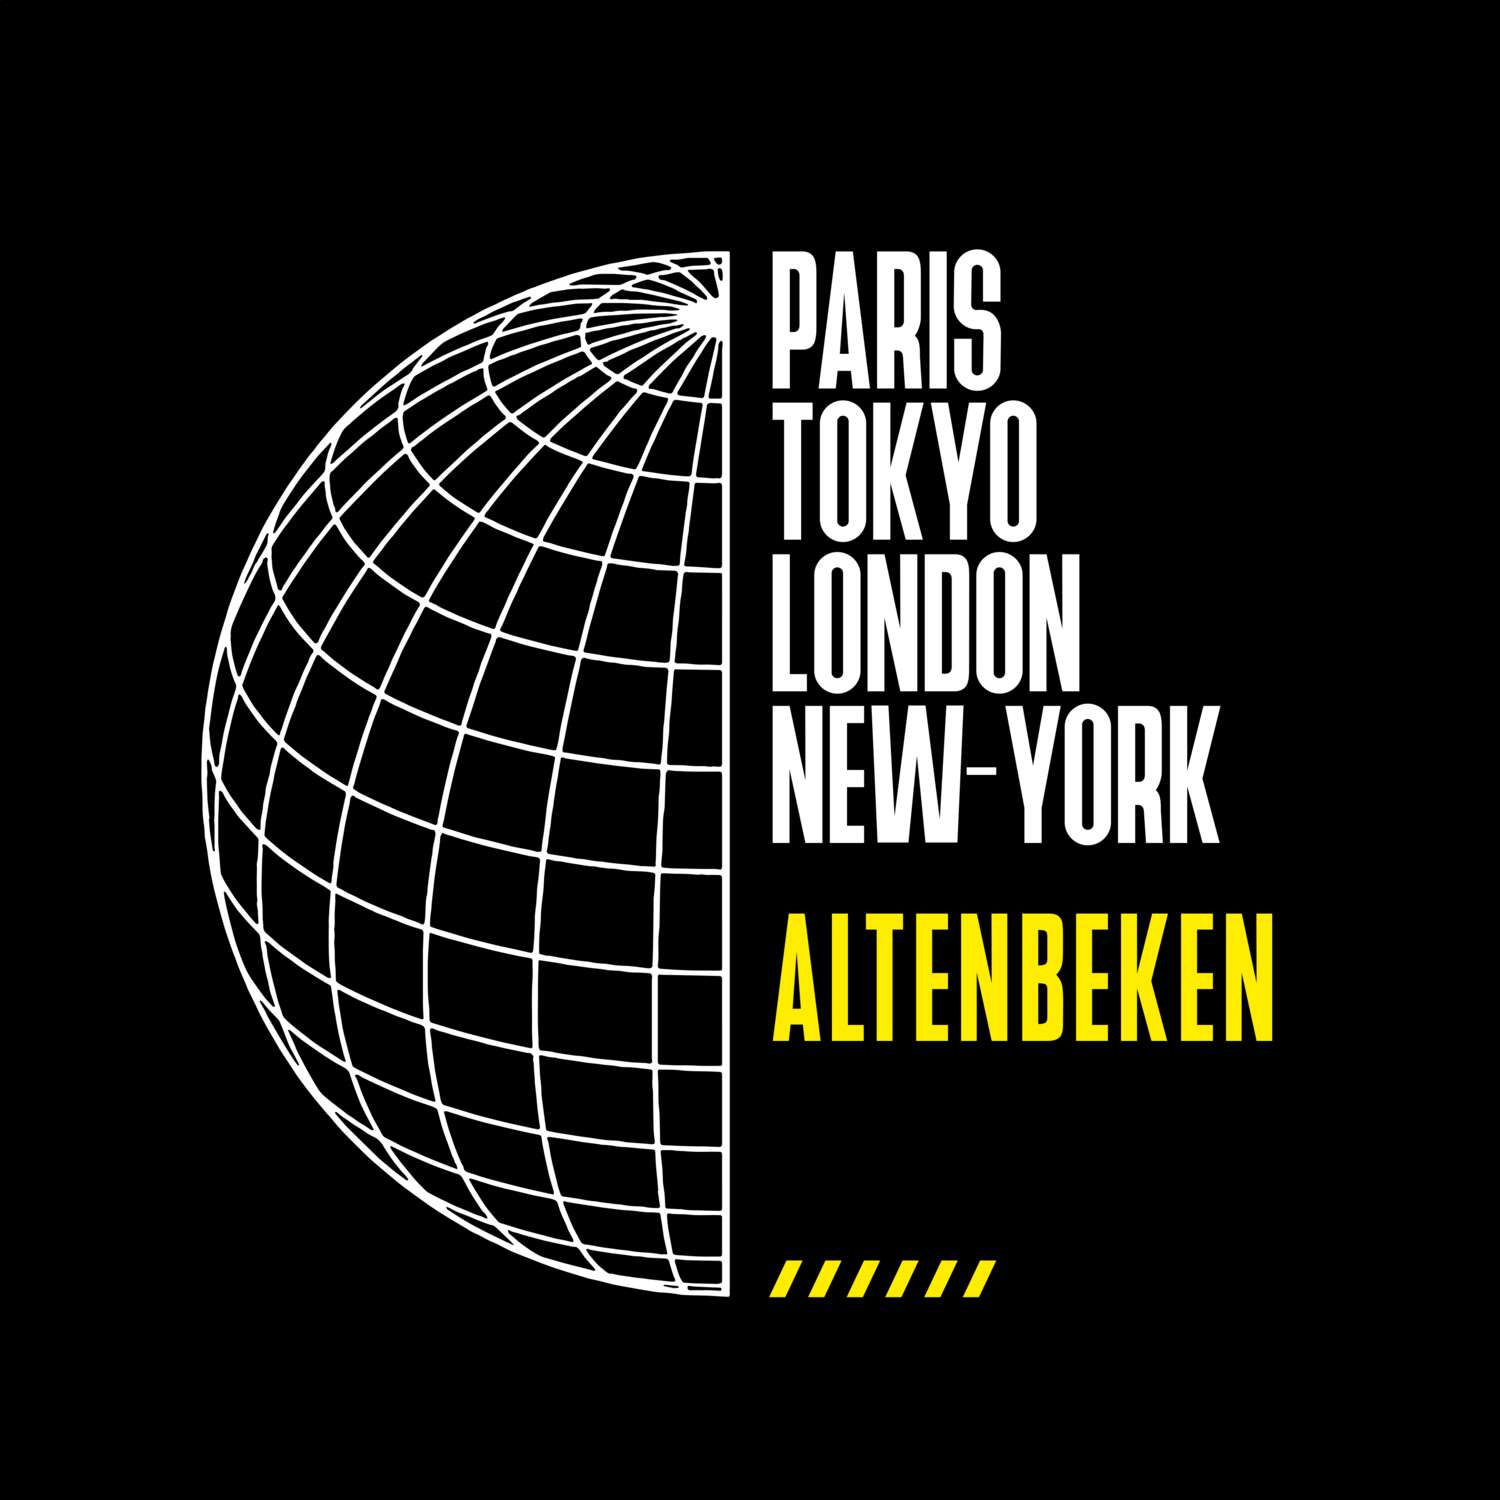 Altenbeken T-Shirt »Paris Tokyo London«